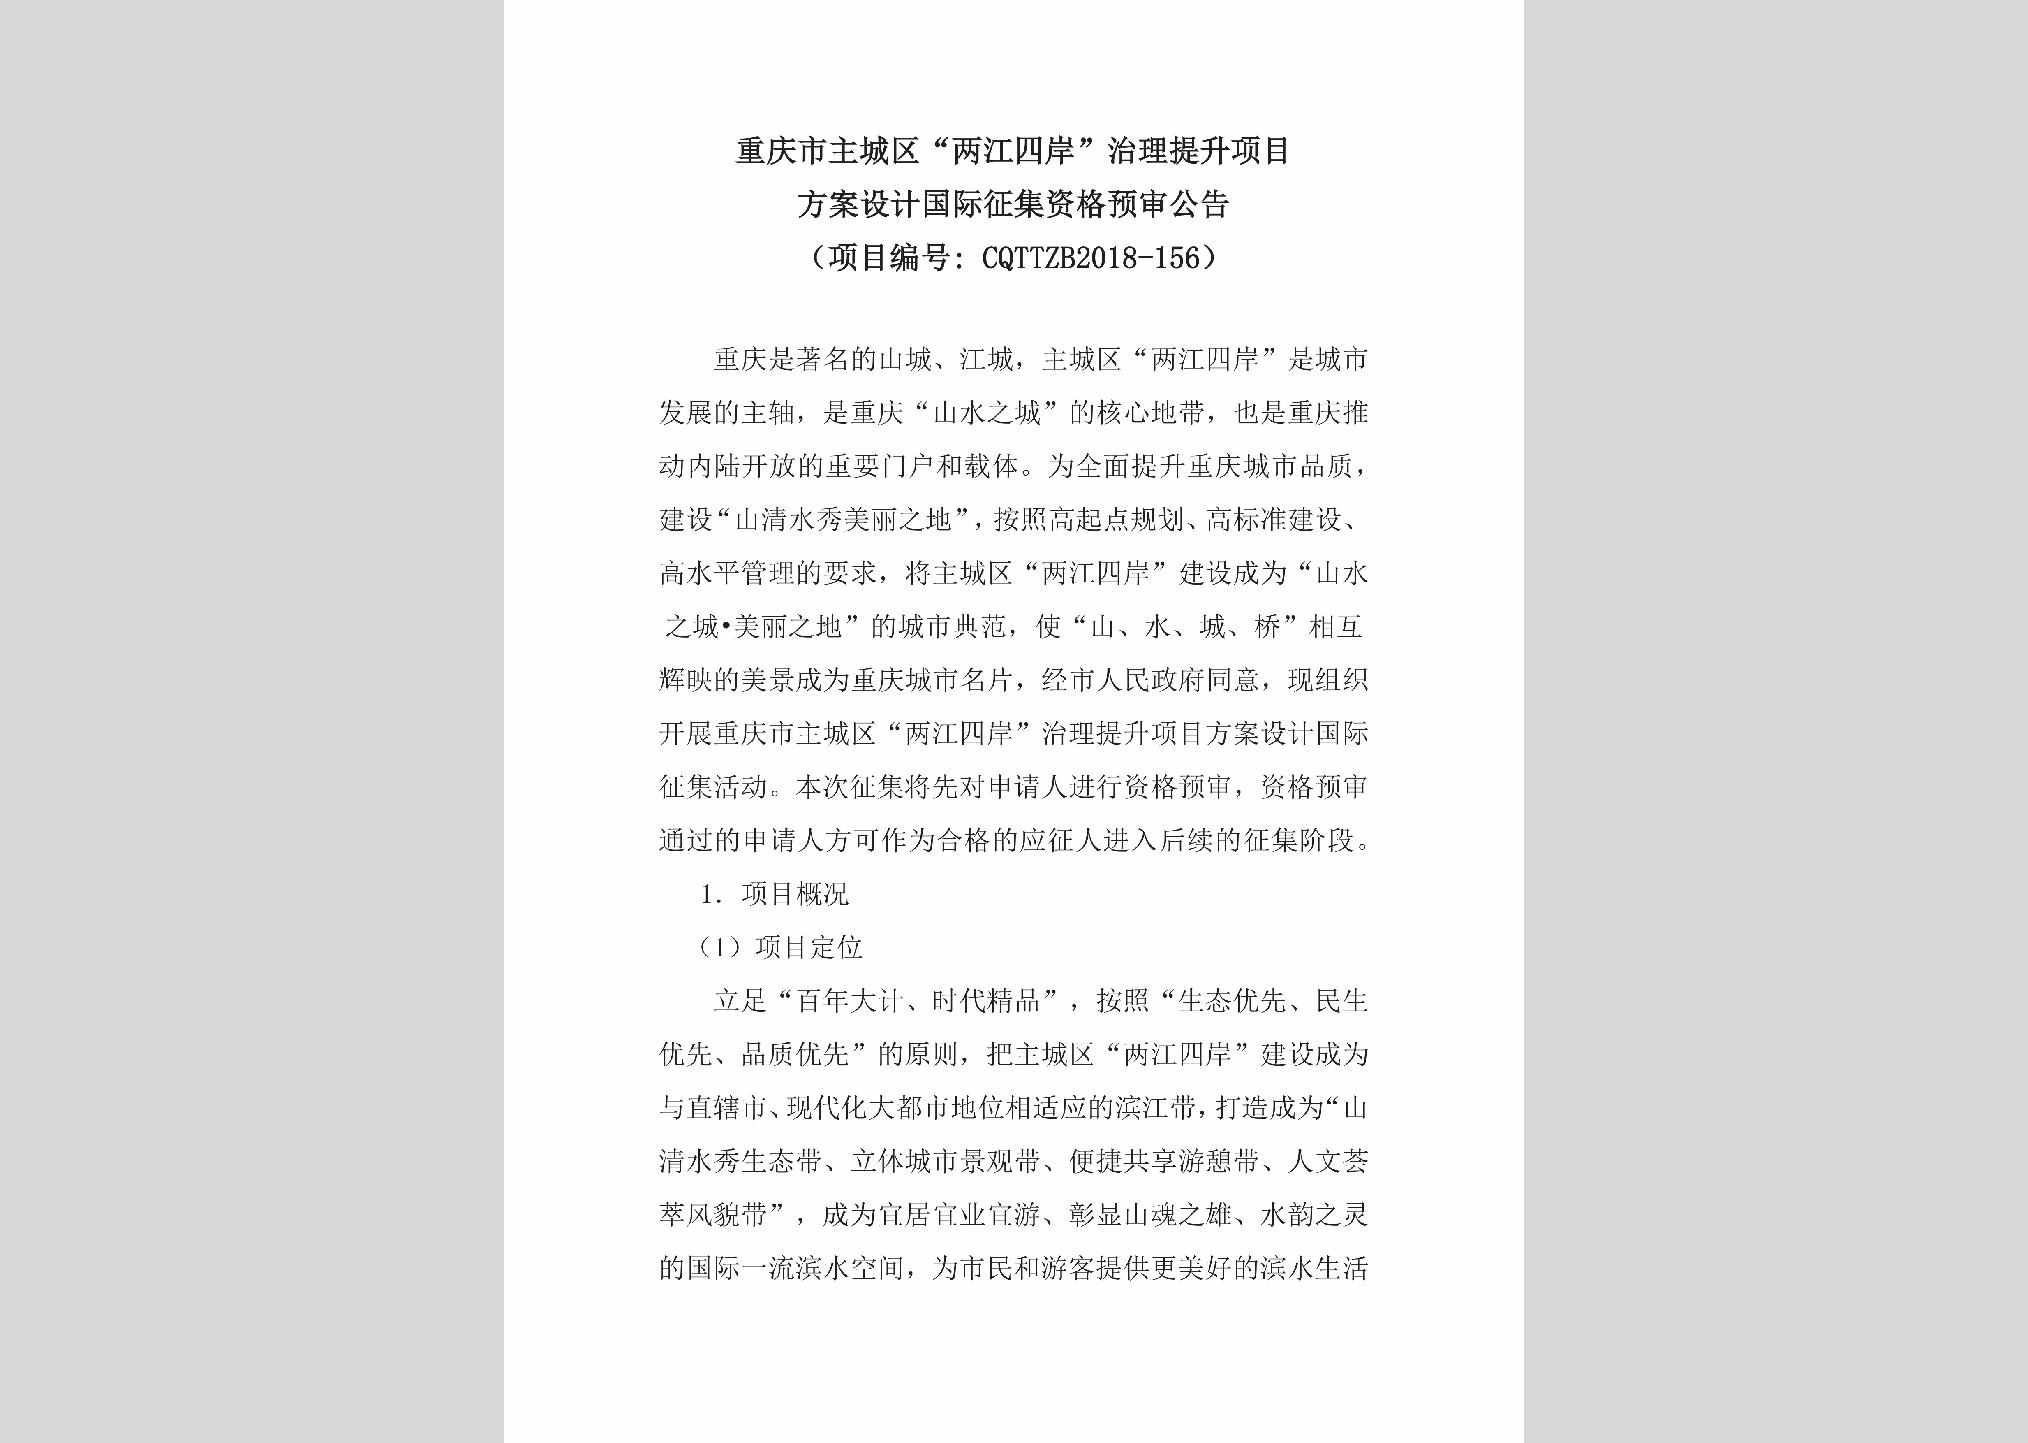 CQ-ZCQLJSAZ-2018：重庆市主城区“两江四岸”治理提升项目方案设计国际征集资格预审公告